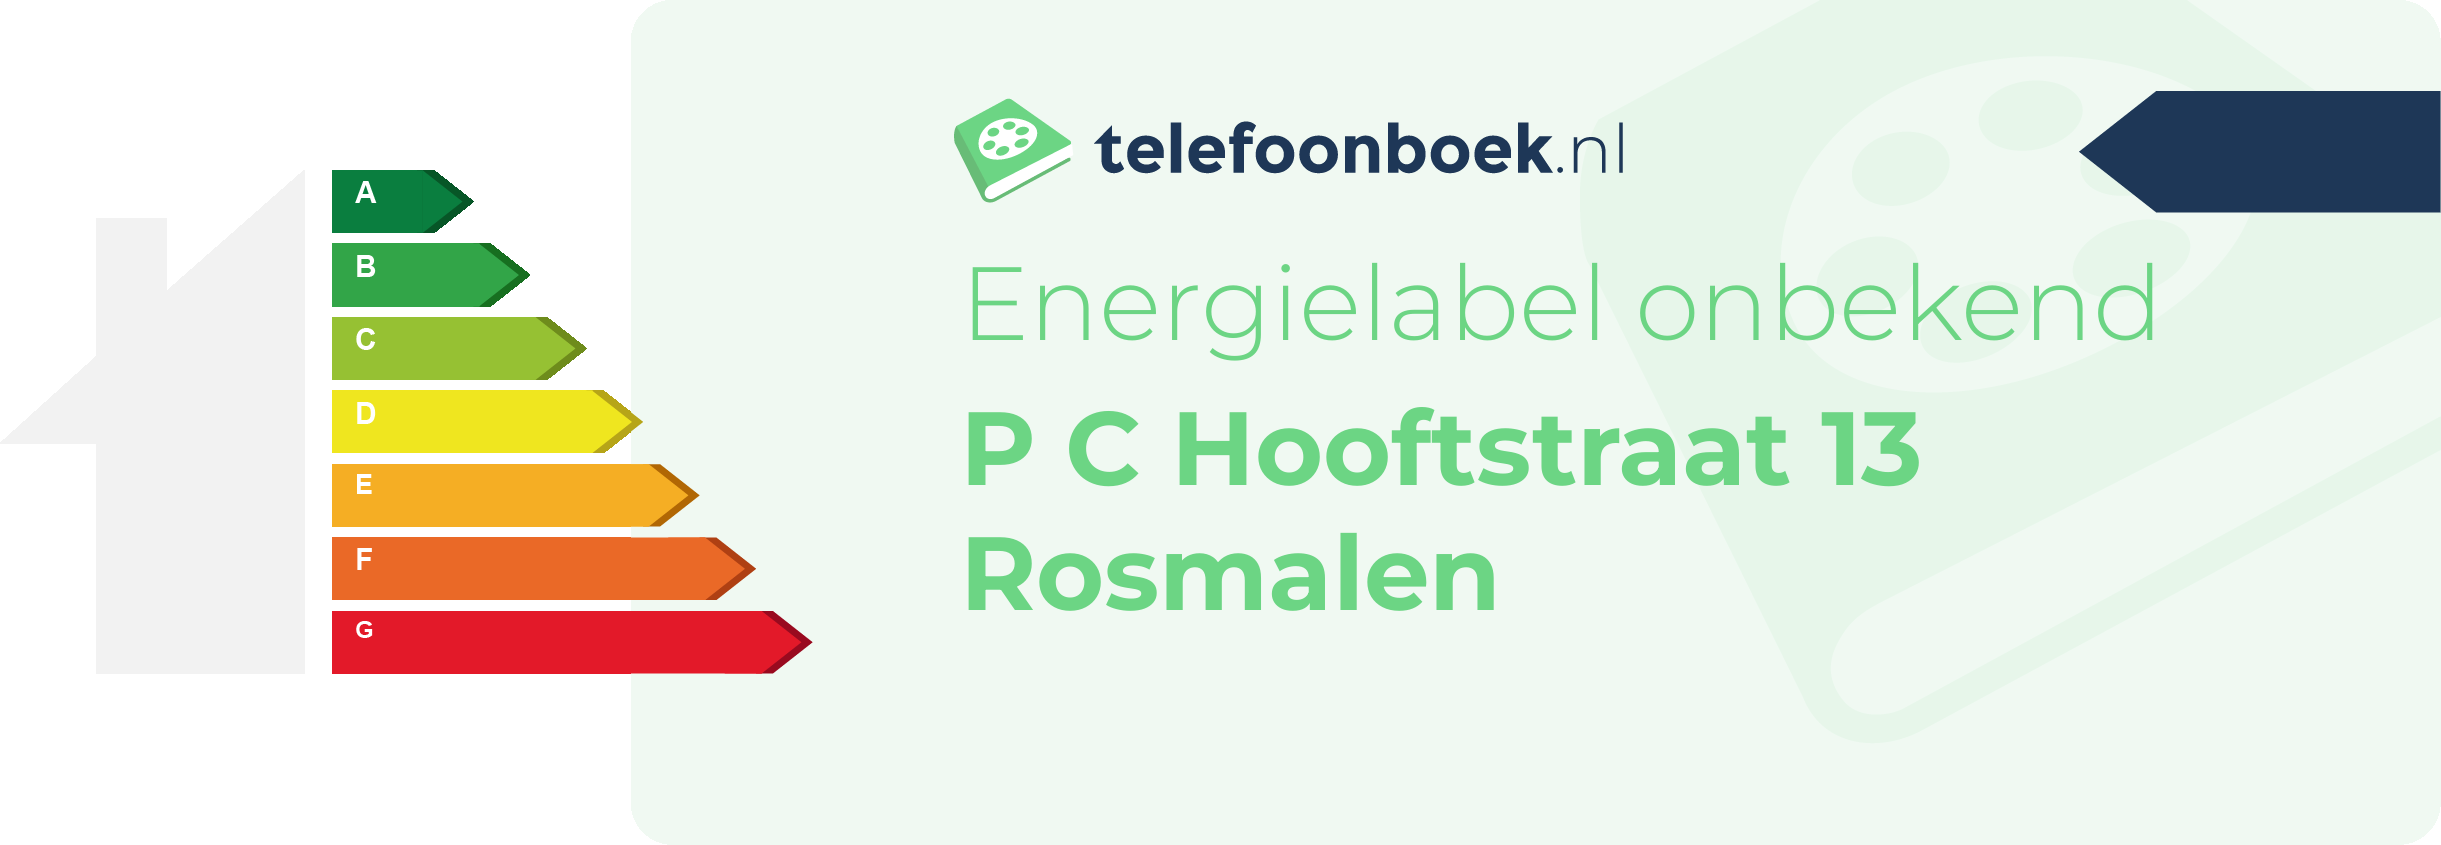 Energielabel P C Hooftstraat 13 Rosmalen